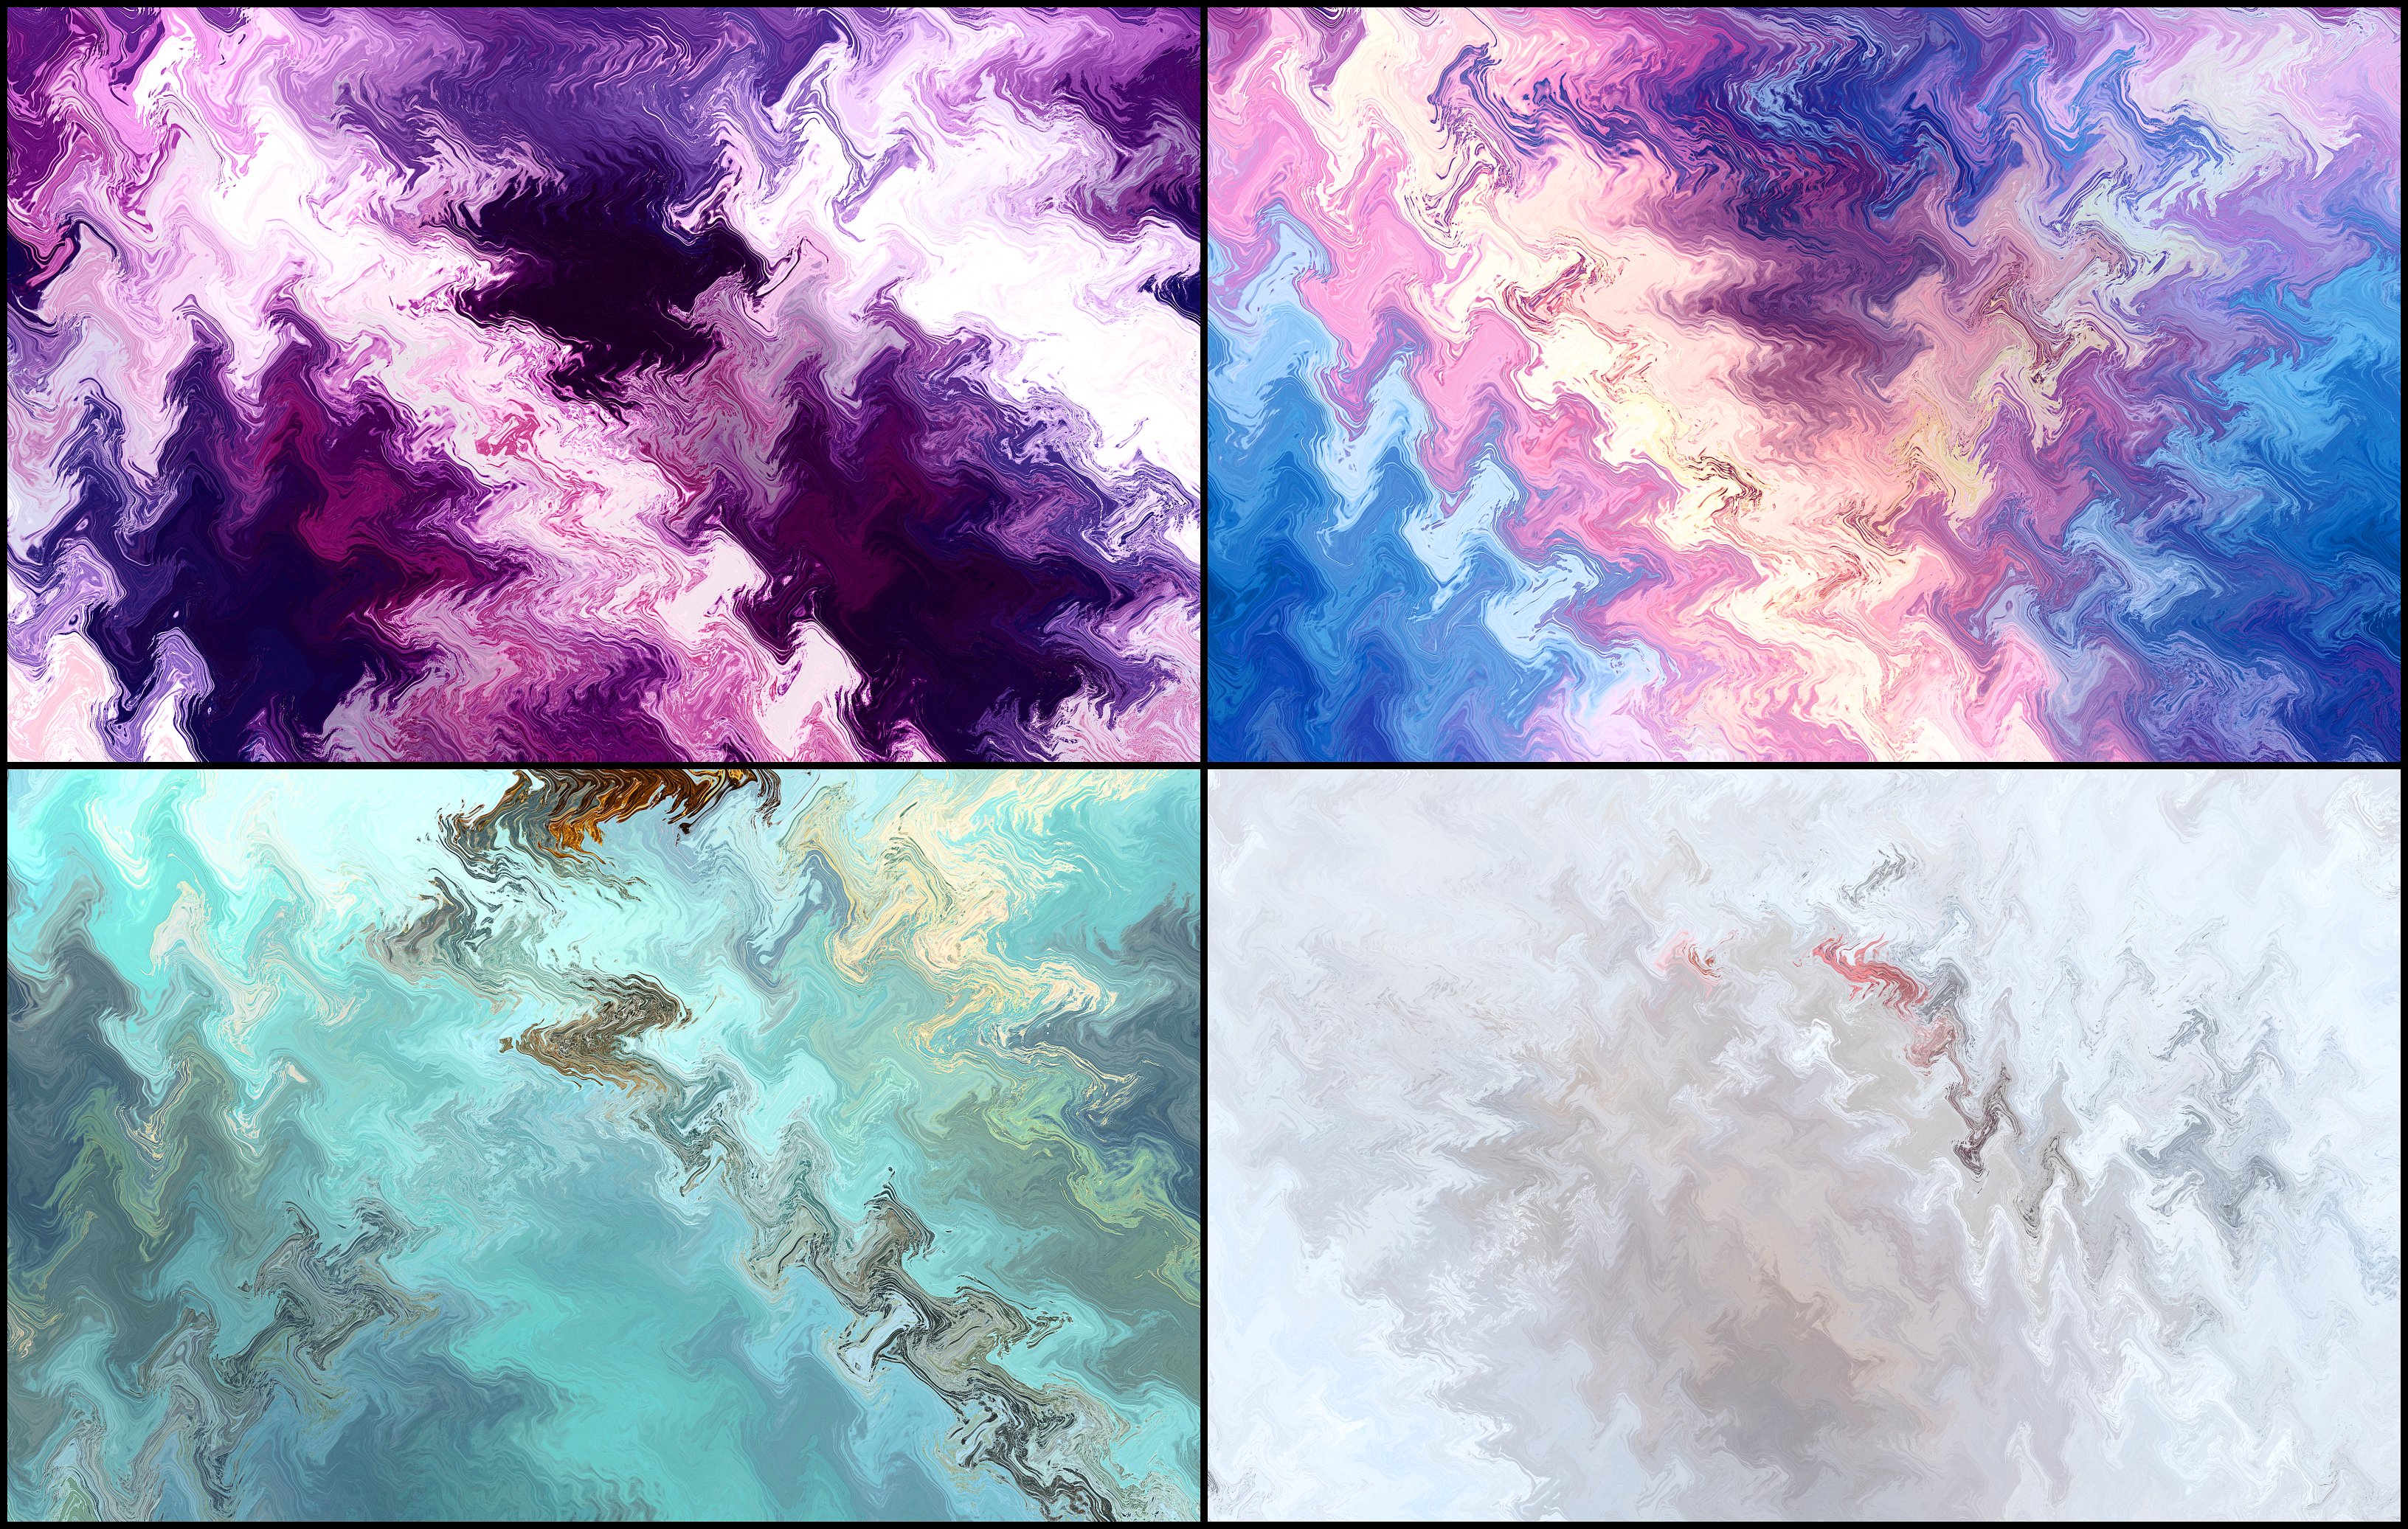 令人敬畏的炫酷复古抽象波浪背景纹理 Awesome Cool Retro Abstract Wavy Background Texture插图2